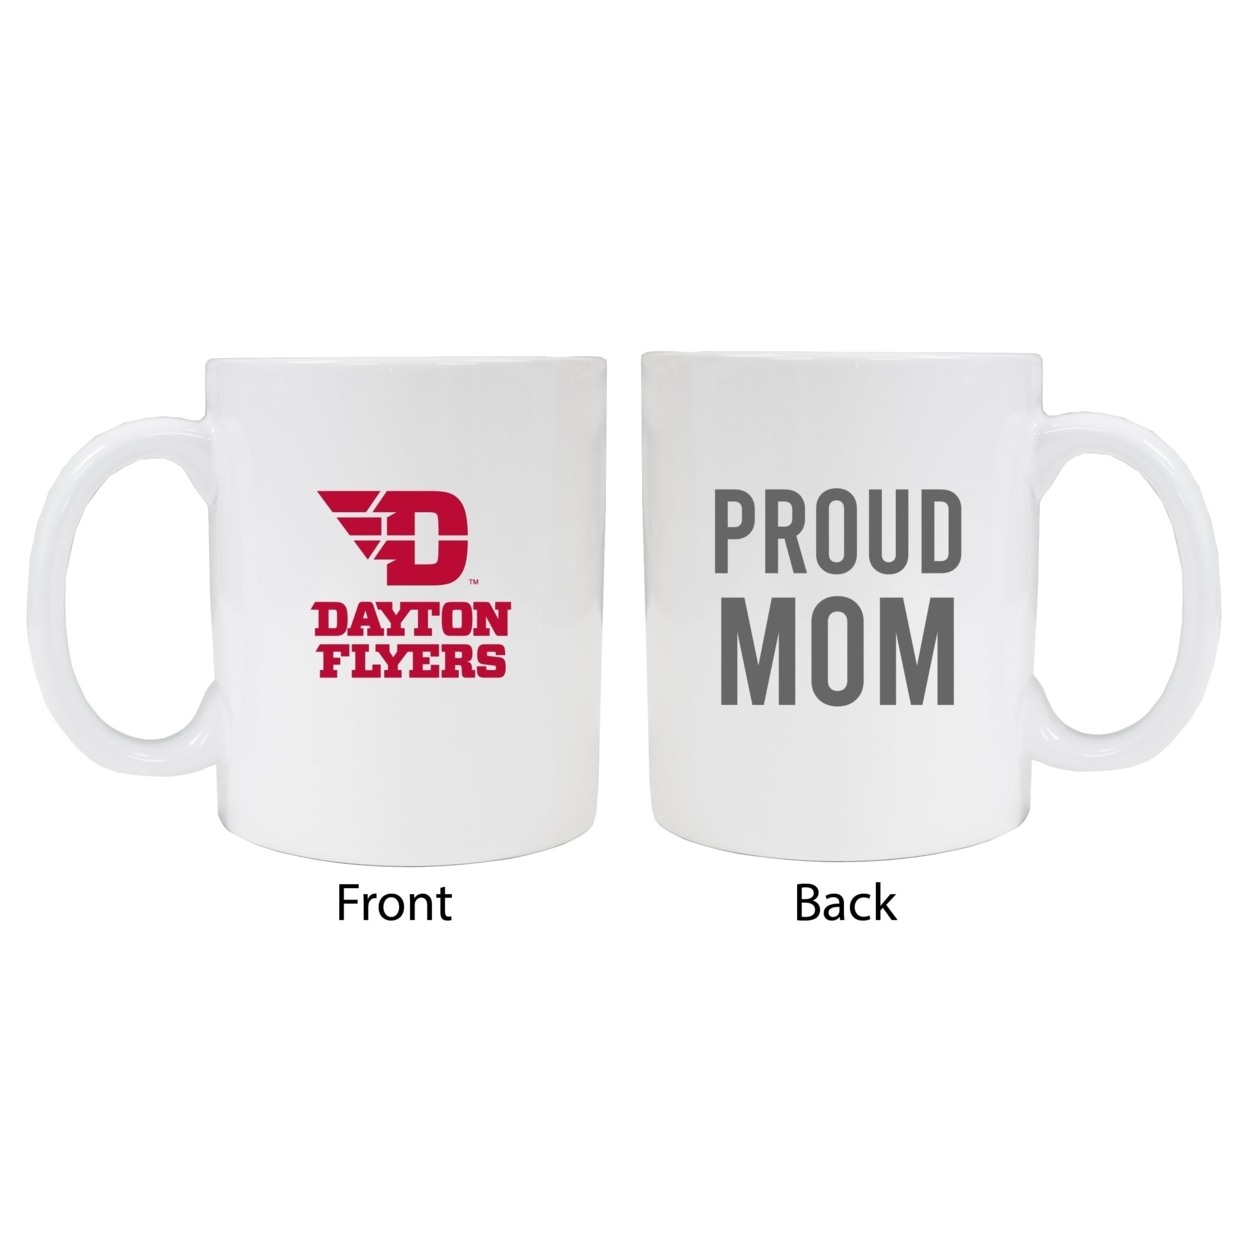 Dayton Flyers Proud Mom Ceramic Coffee Mug - White (2 Pack)